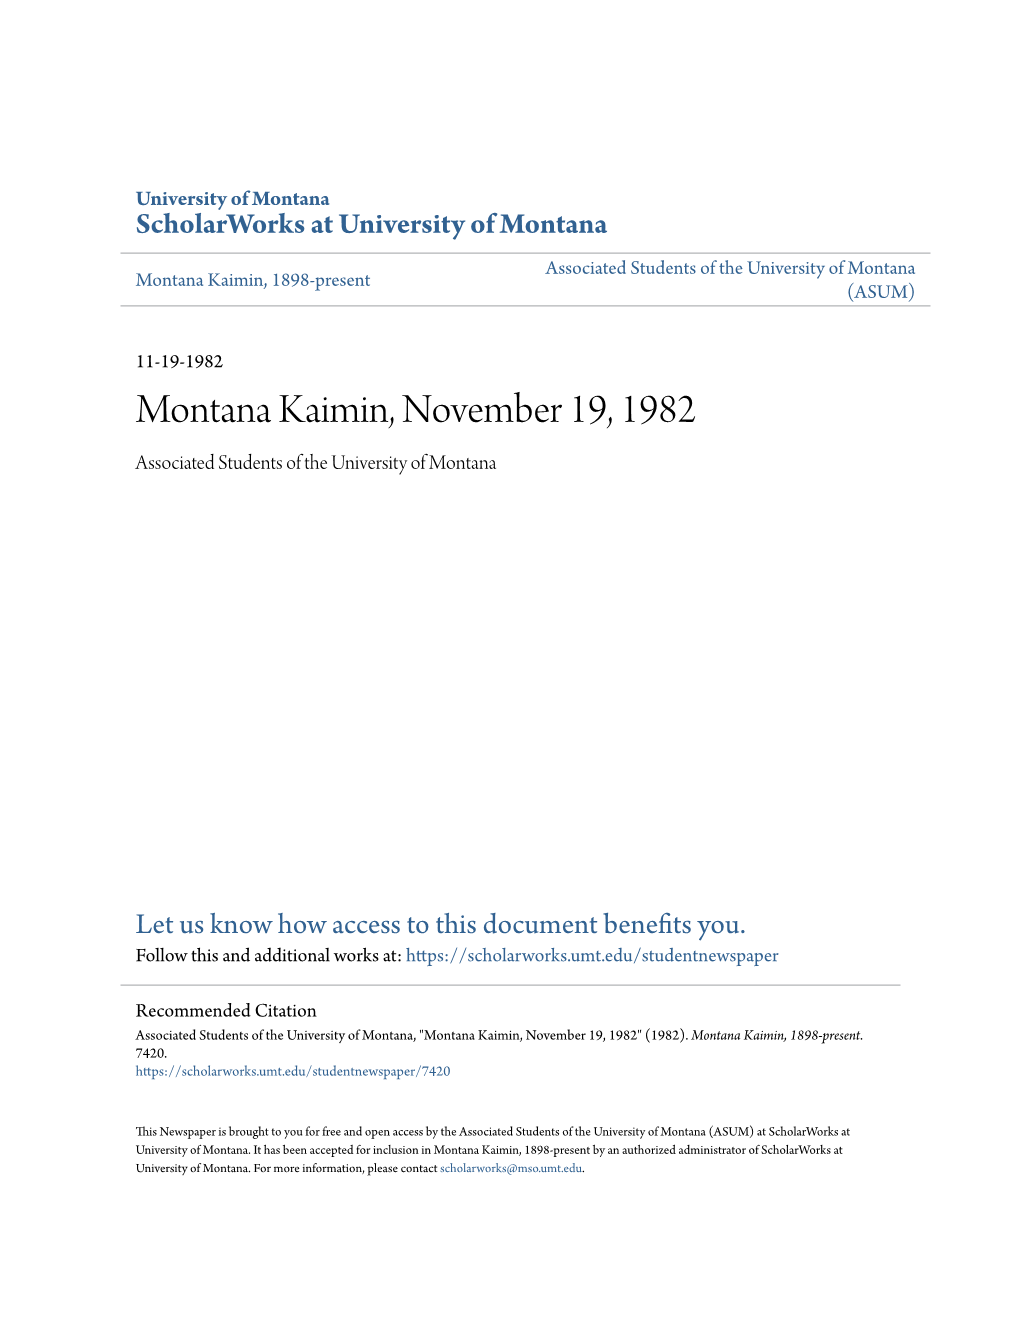 Montana Kaimin, November 19, 1982 Associated Students of the University of Montana